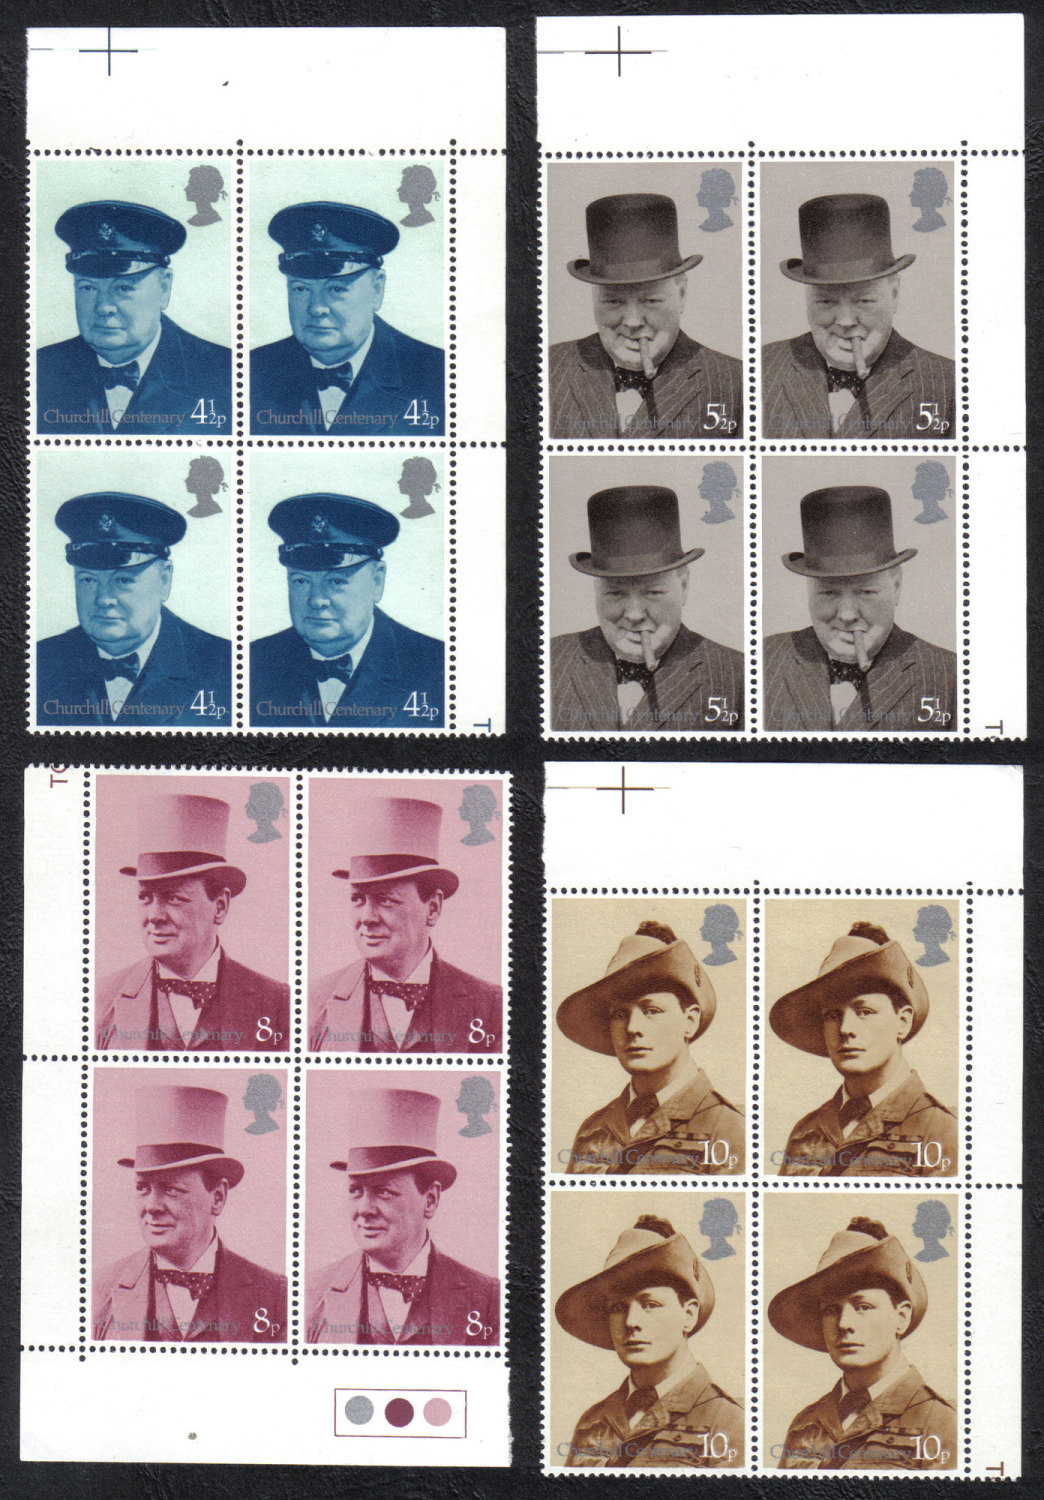 British Stamps 1974 Winston Churchill Centenary of his birth - Block of 4 M